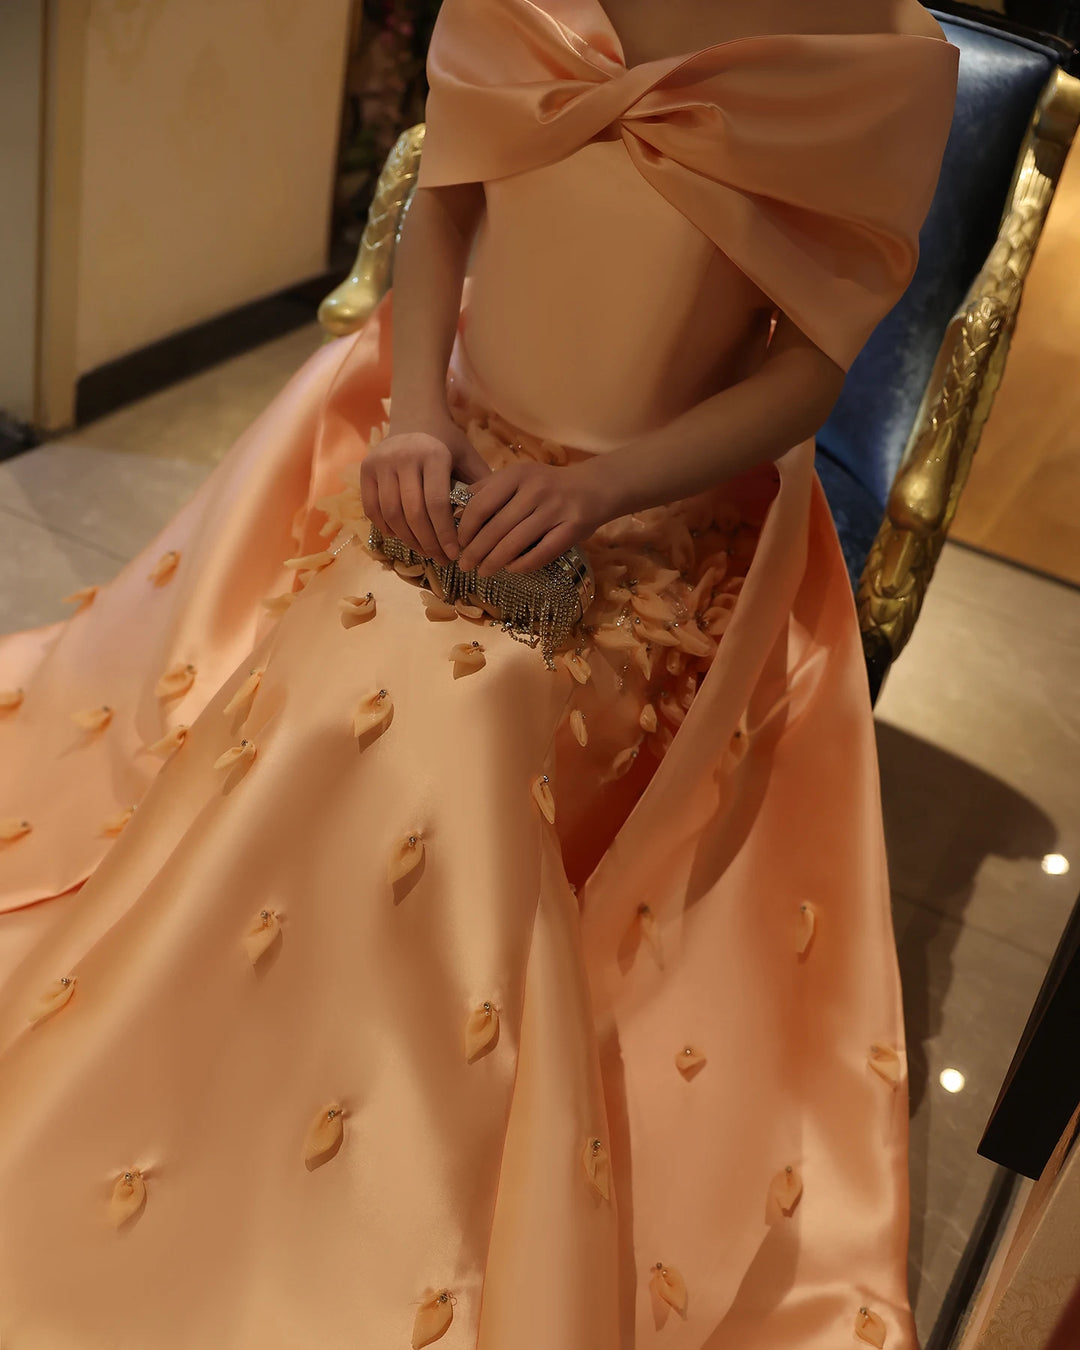 Dreamy Vow Luxury 3D Flowers Blush Pink Satin Mermaid Evening Dress Elegant Off Shoulder Women Wedding Prom Party Gowns SS464